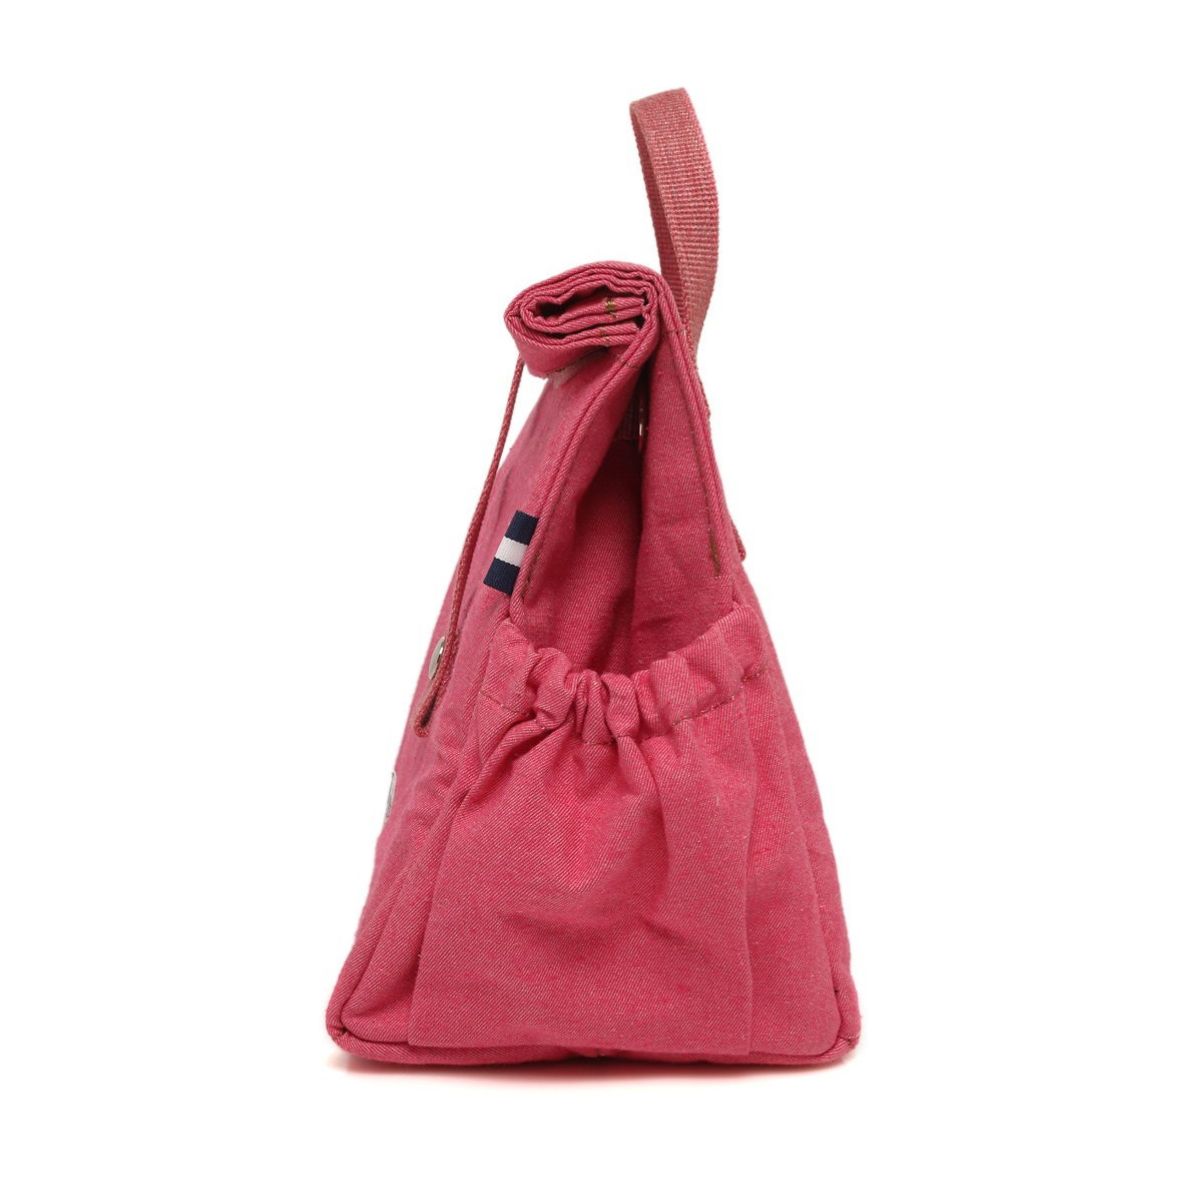 The Lunch Bags Original 2 Ισοθερμική Τσάντα Pink - 5lt